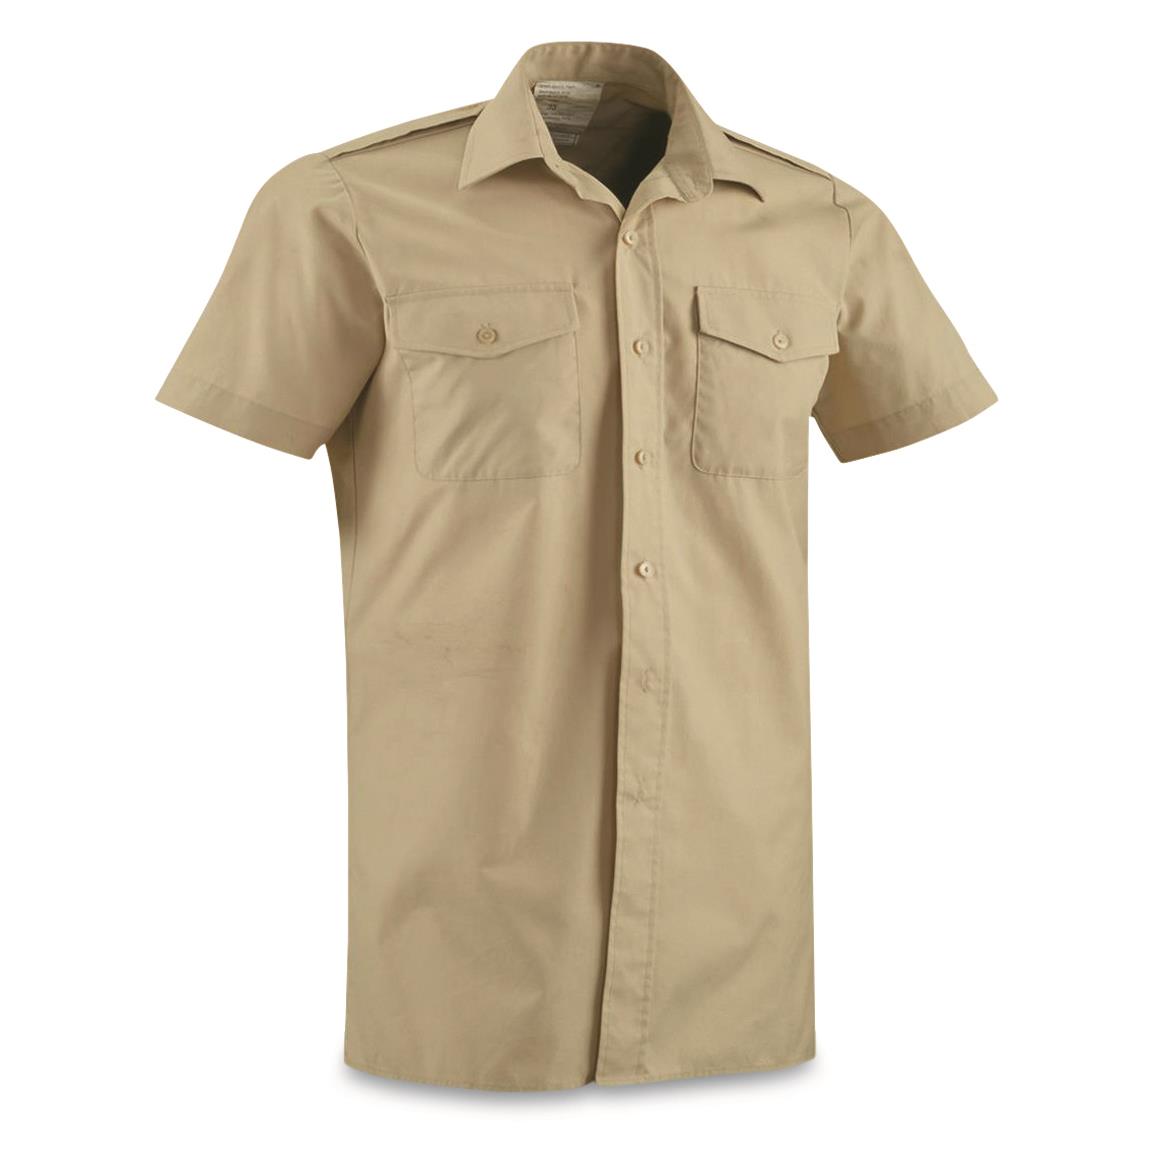 British Military Surplus Short Sleeve Field Shirt, New, Tan